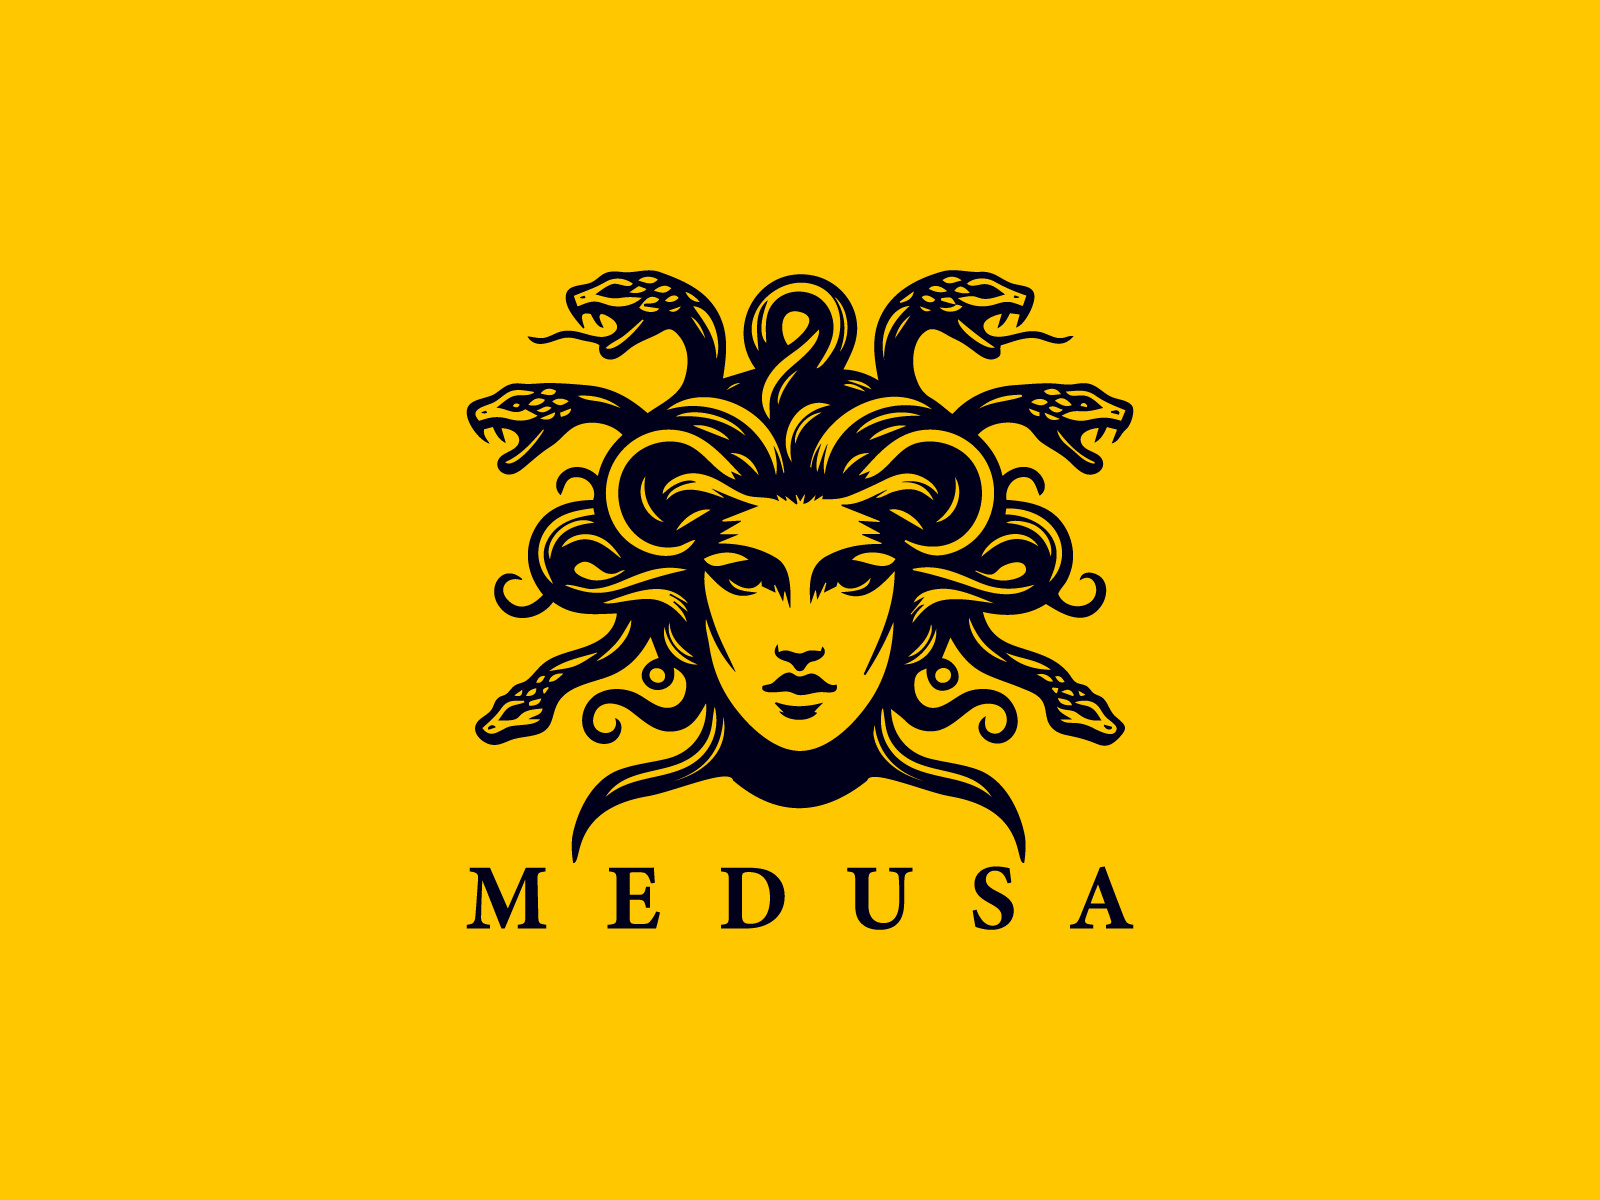 Medusa Logo by Austin Smith on Dribbble